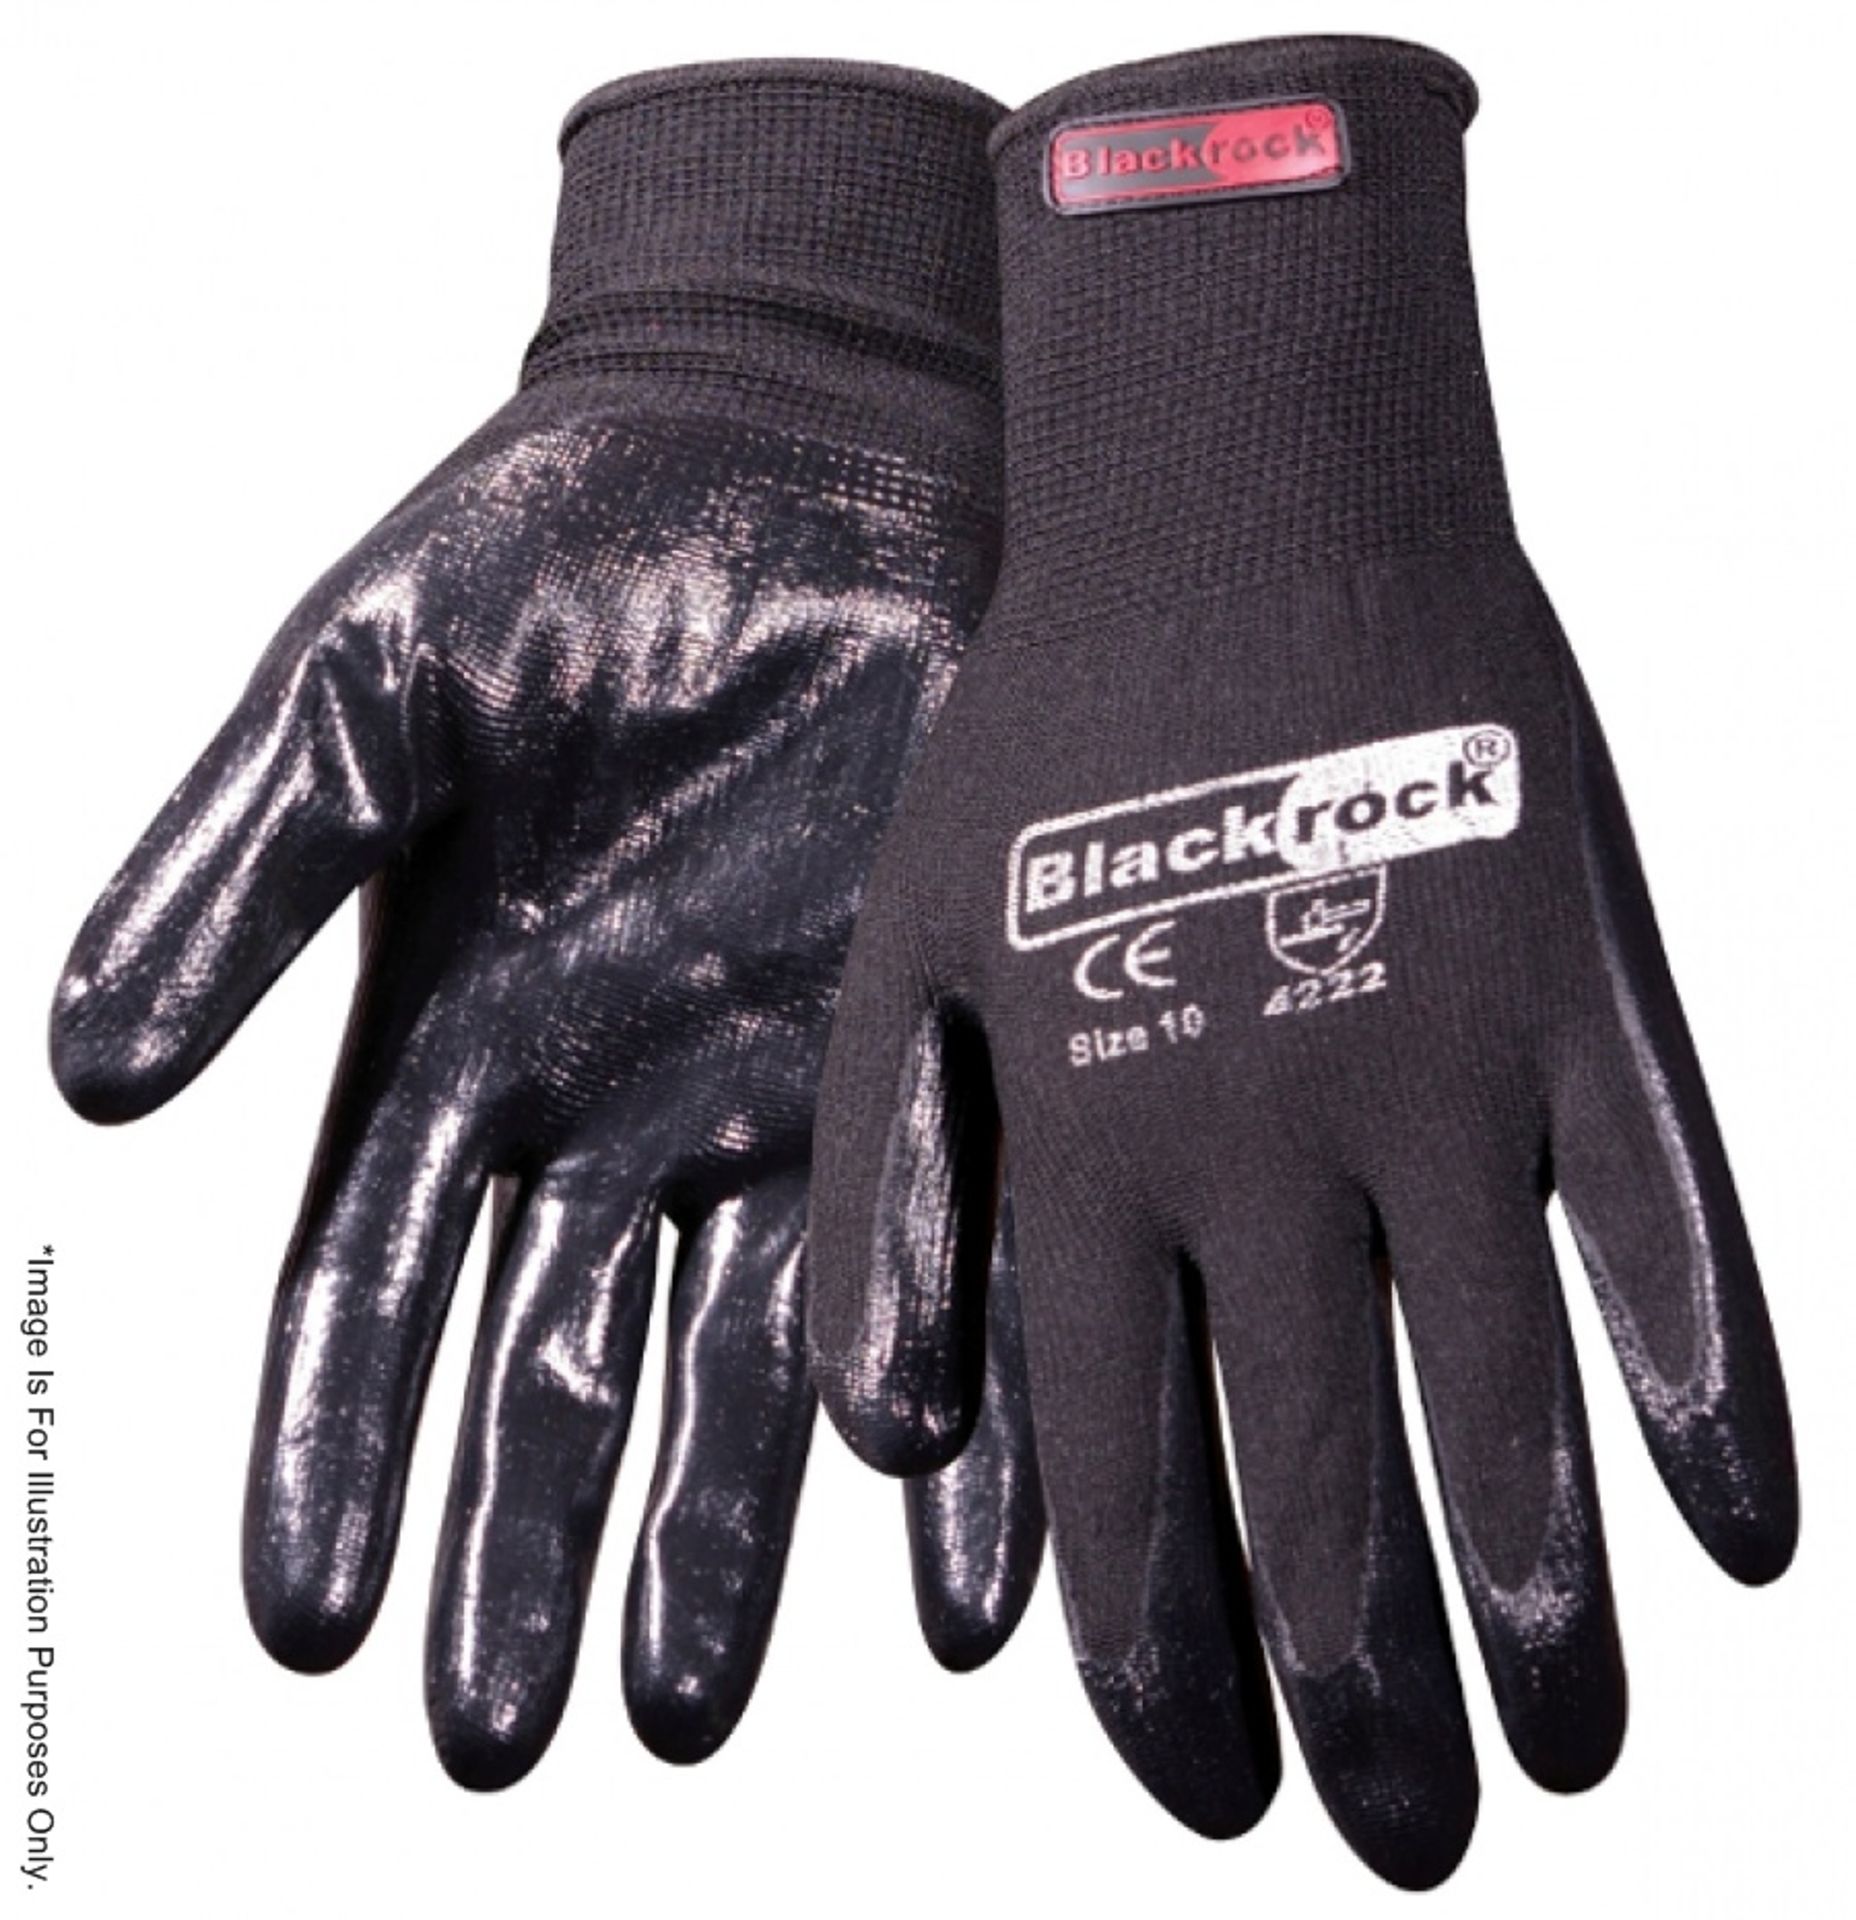 25 x Pairs Of BLACKROCK Lightweight Super Grip Nitrile Gloves - Various Sizes 9-11 - New/Unused